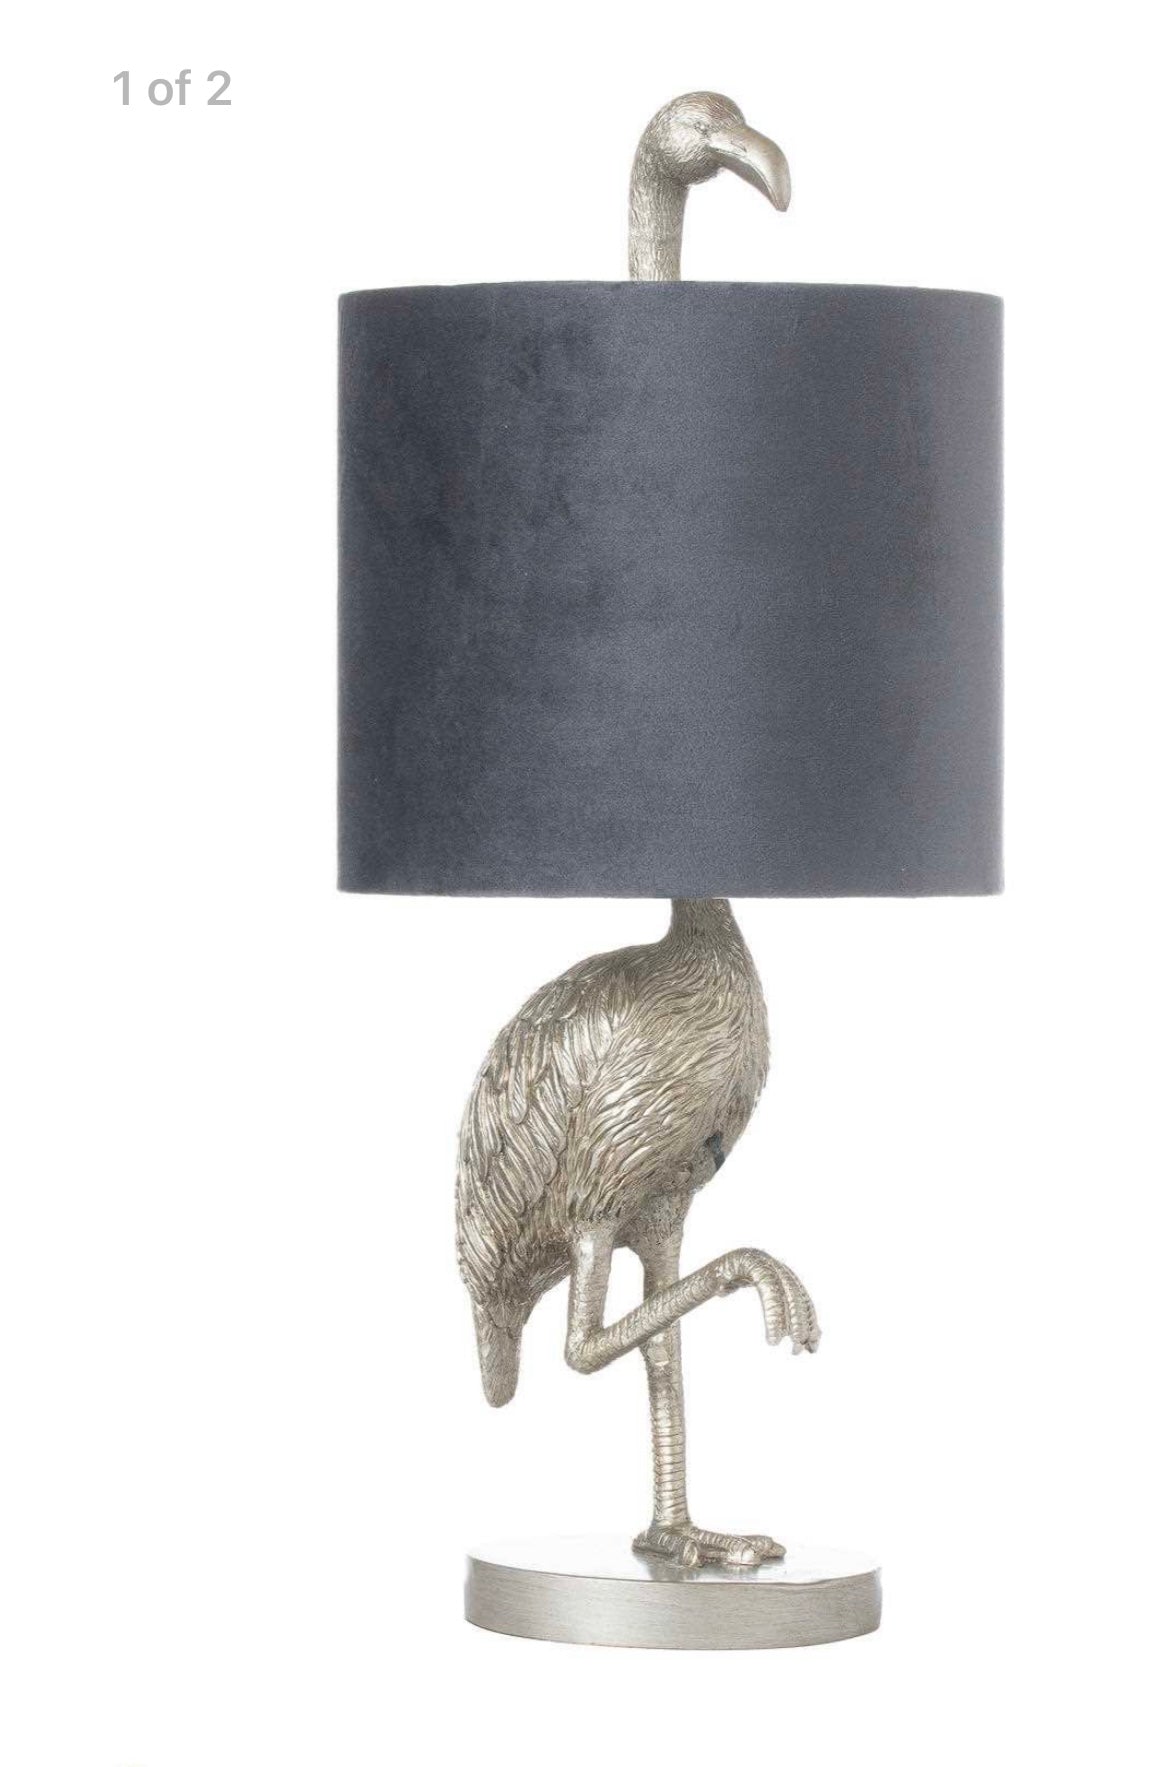 Flamingo Silver Table Lamp with Grey Shade - Unique Home Pieces